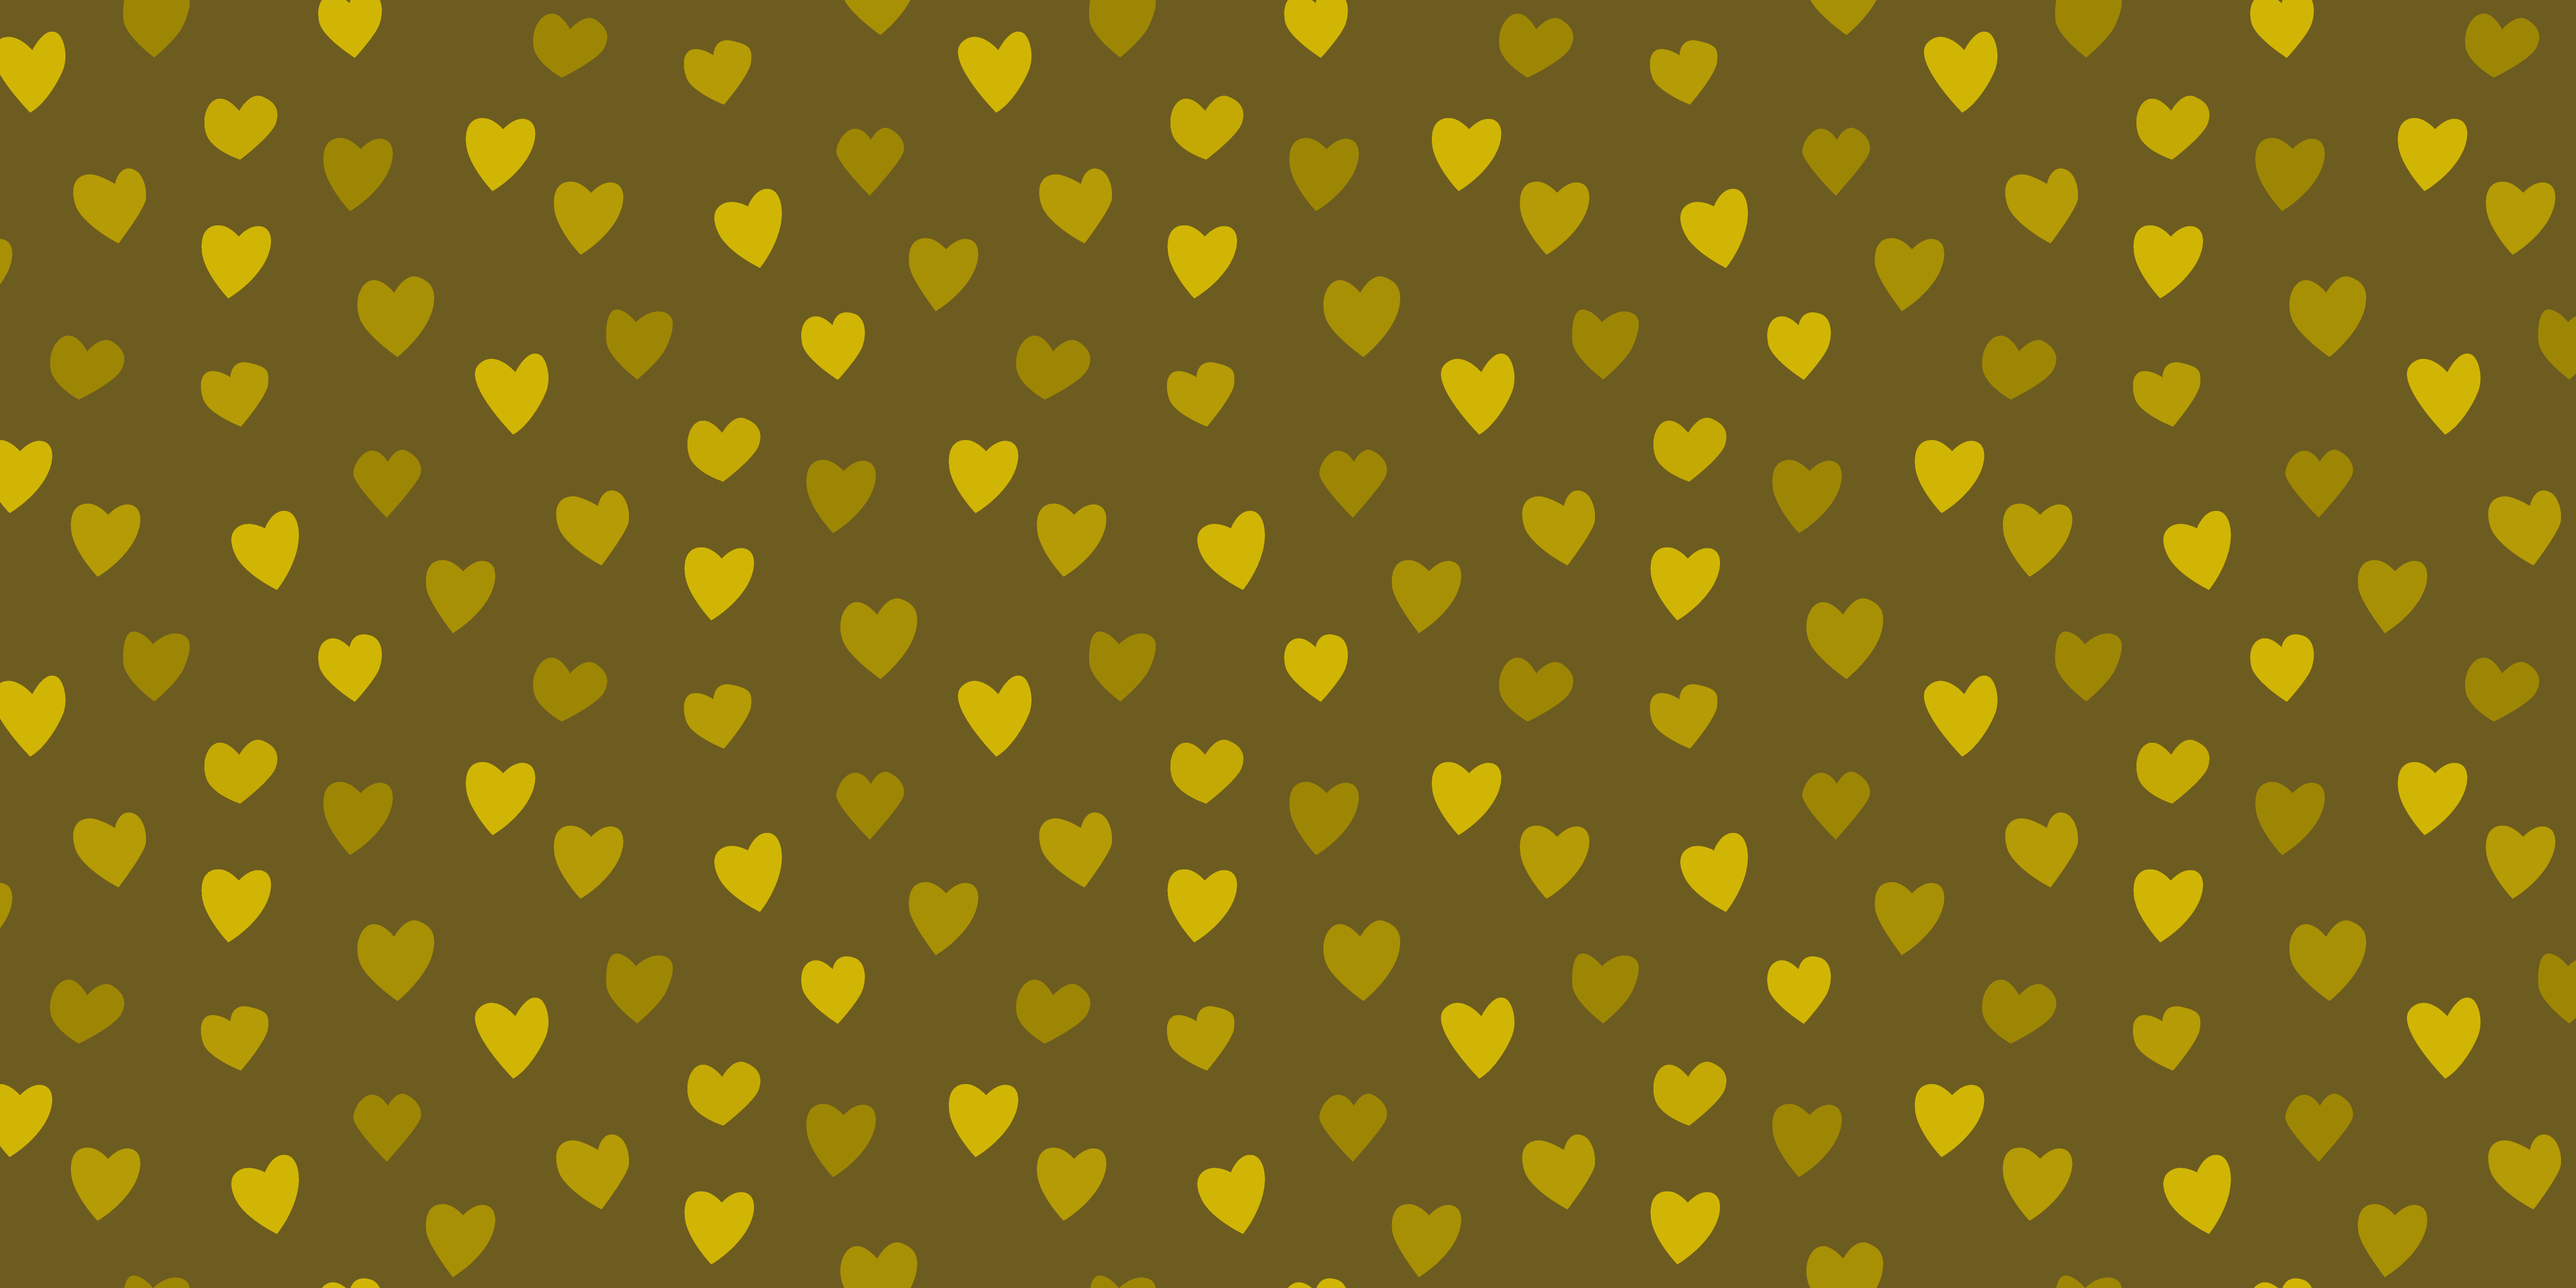 Golden hearts background seamless pattern